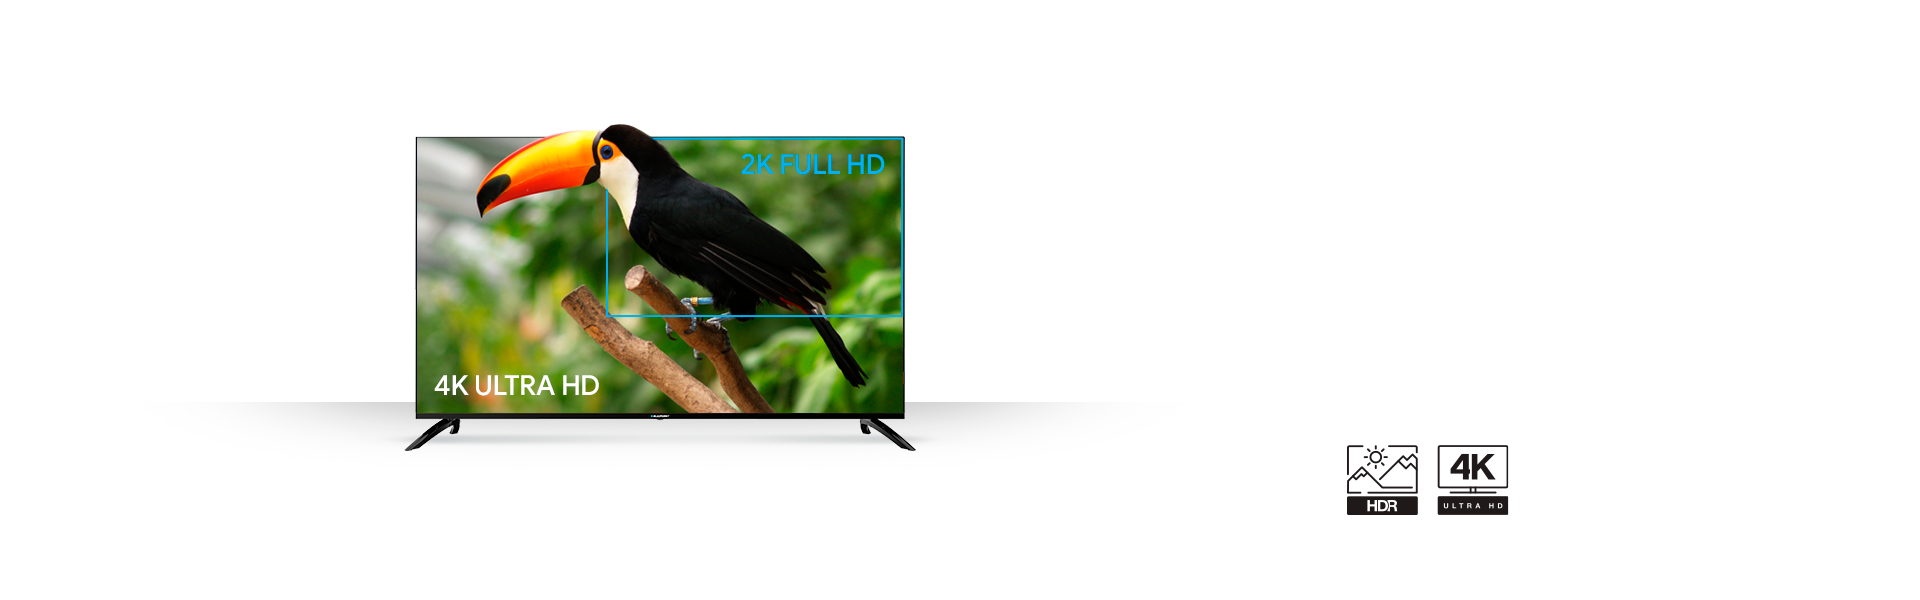 UHD 4K Android TV Blaupunkt 65UBC6000